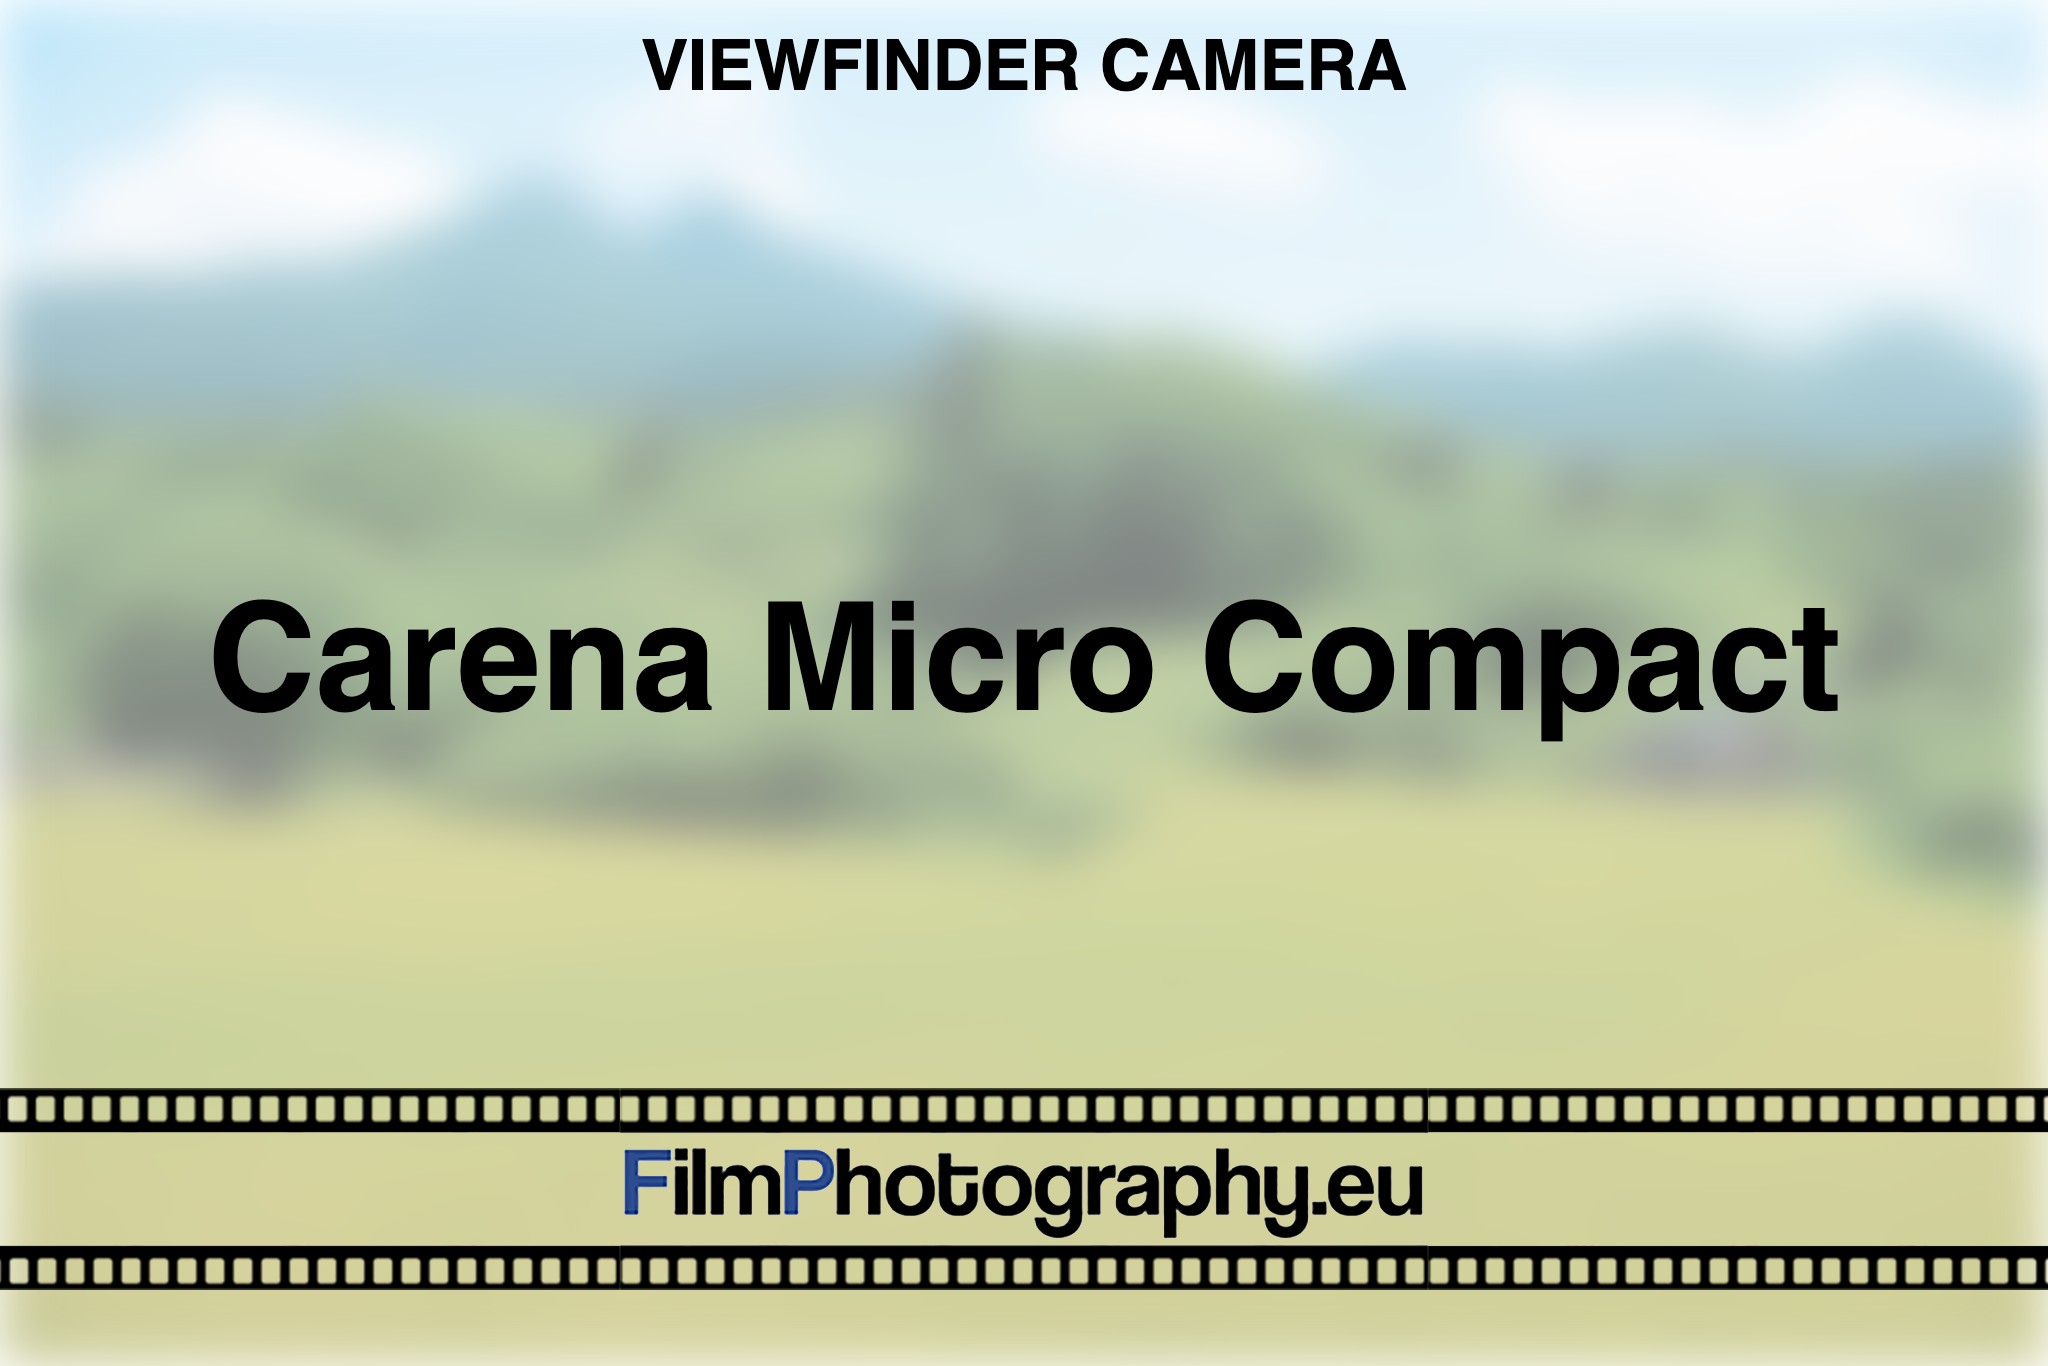 carena-micro-compact-viewfinder-camera-bnv